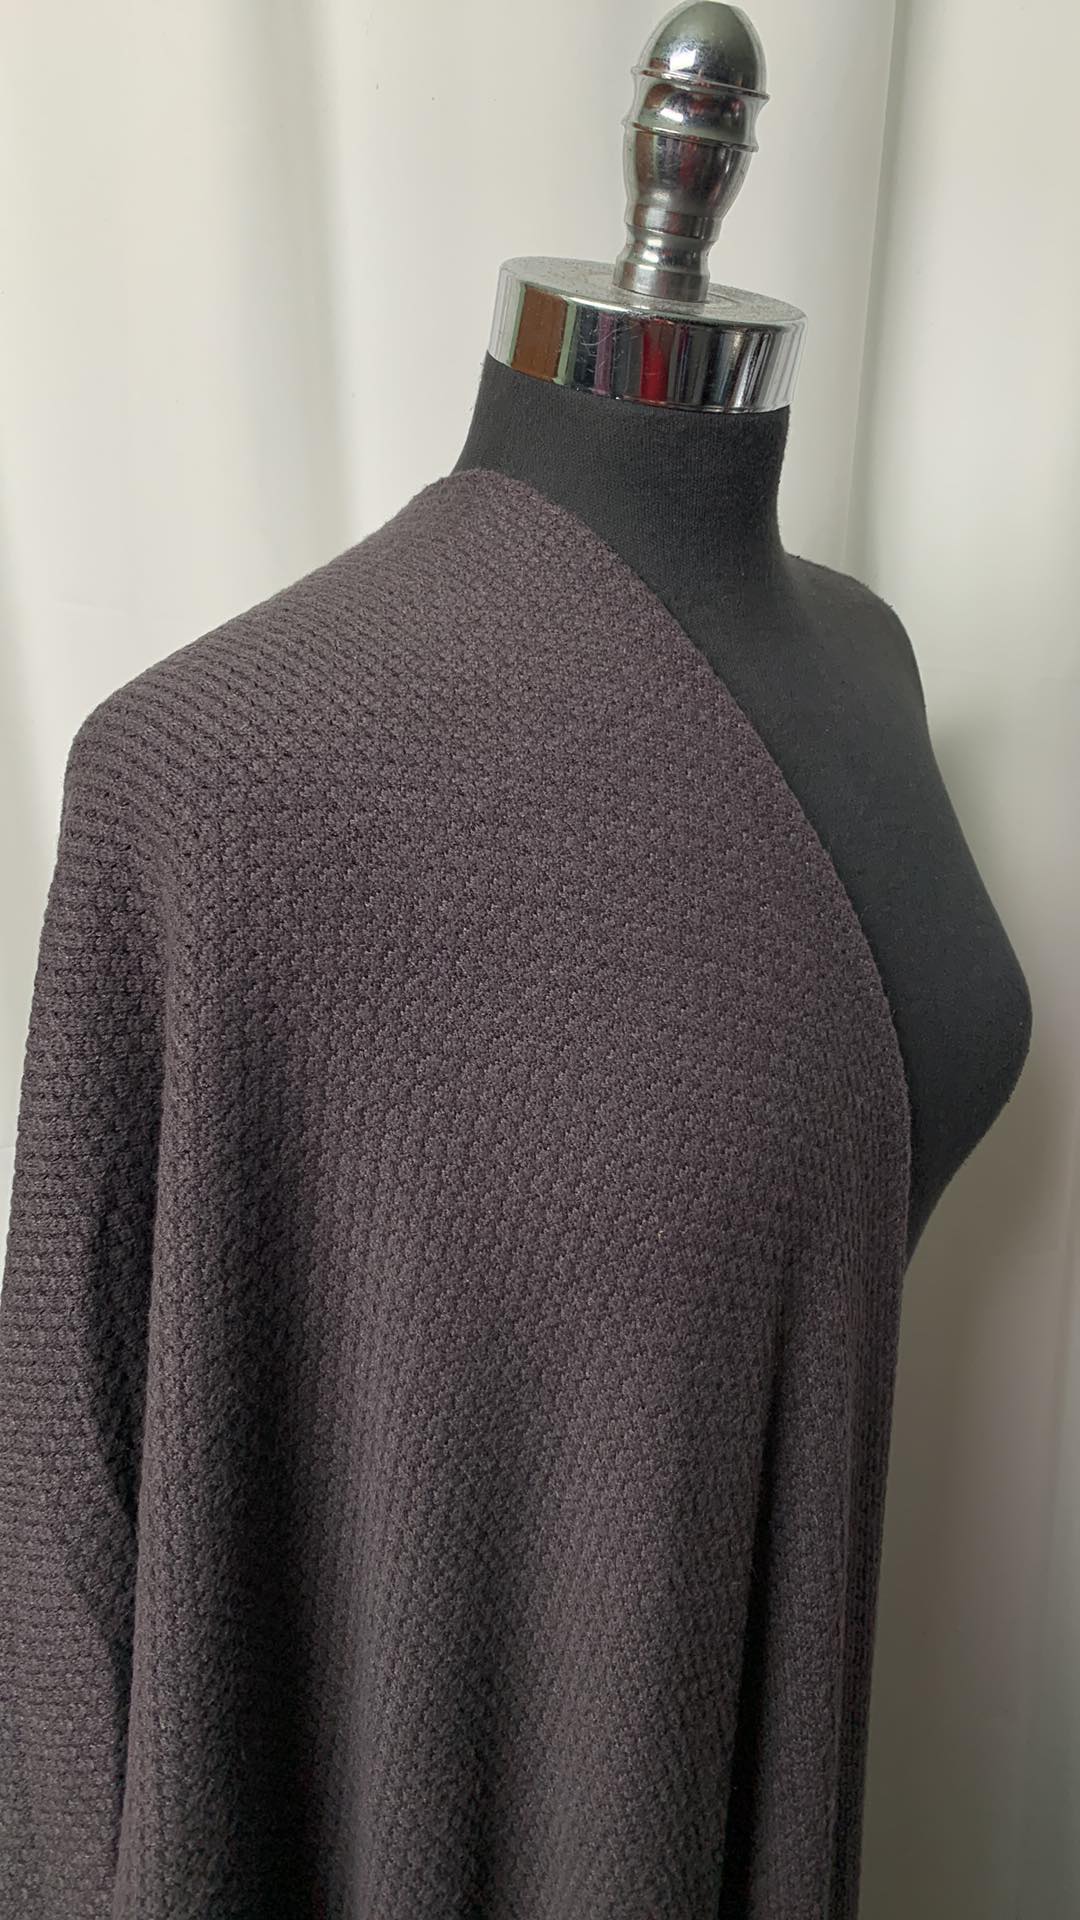 Charcoal - Textured Sweater Knit - 3 Yard Cut